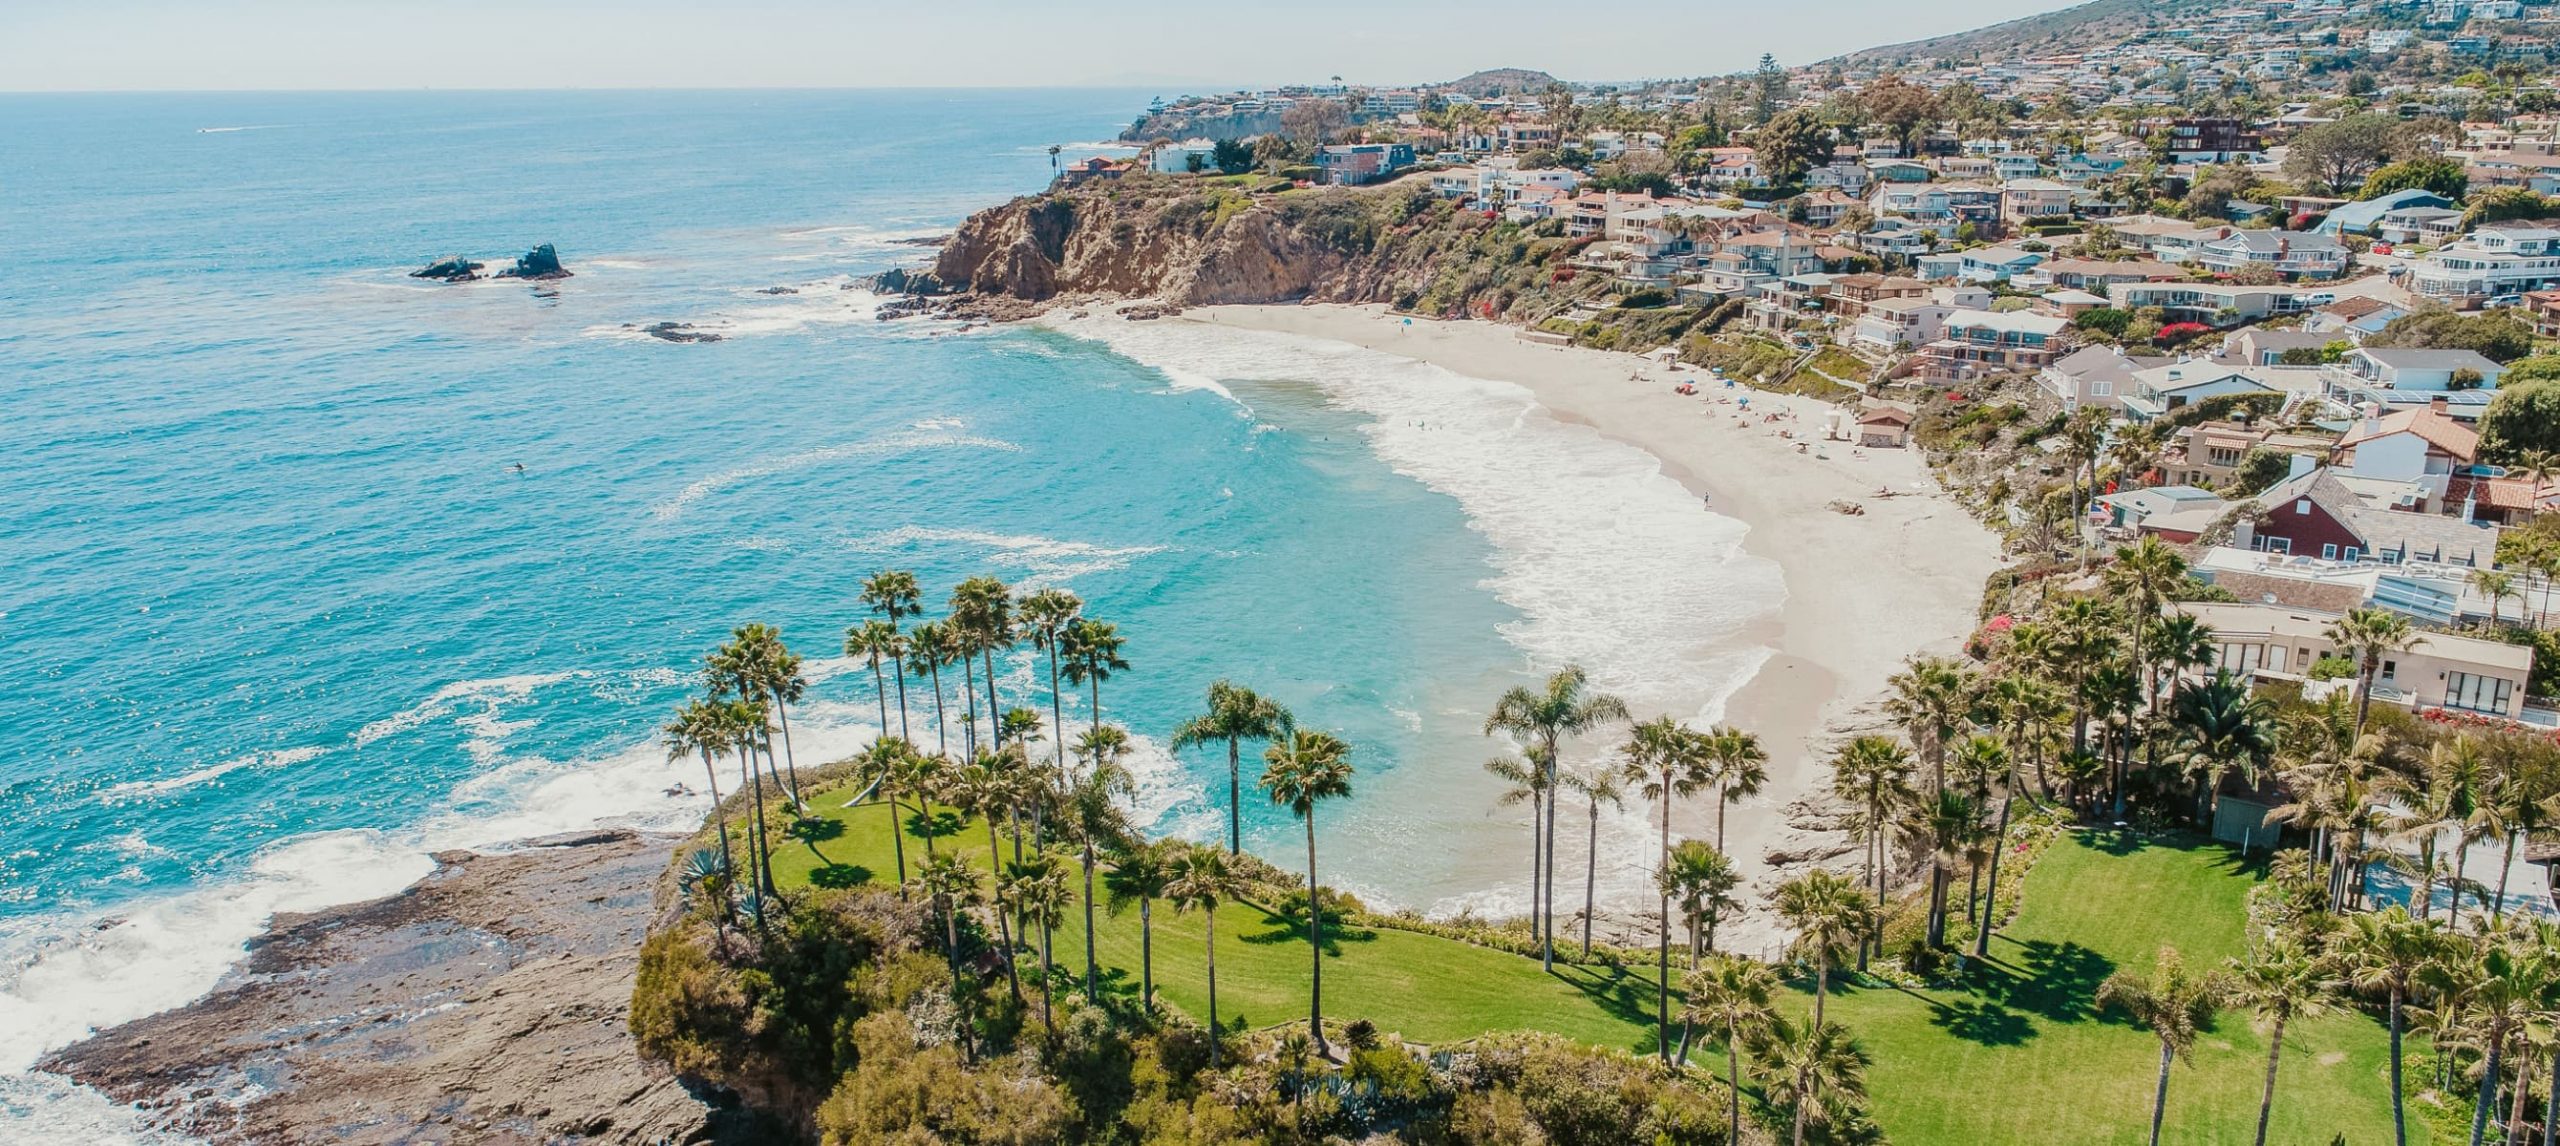 best beaches to visit in california in october